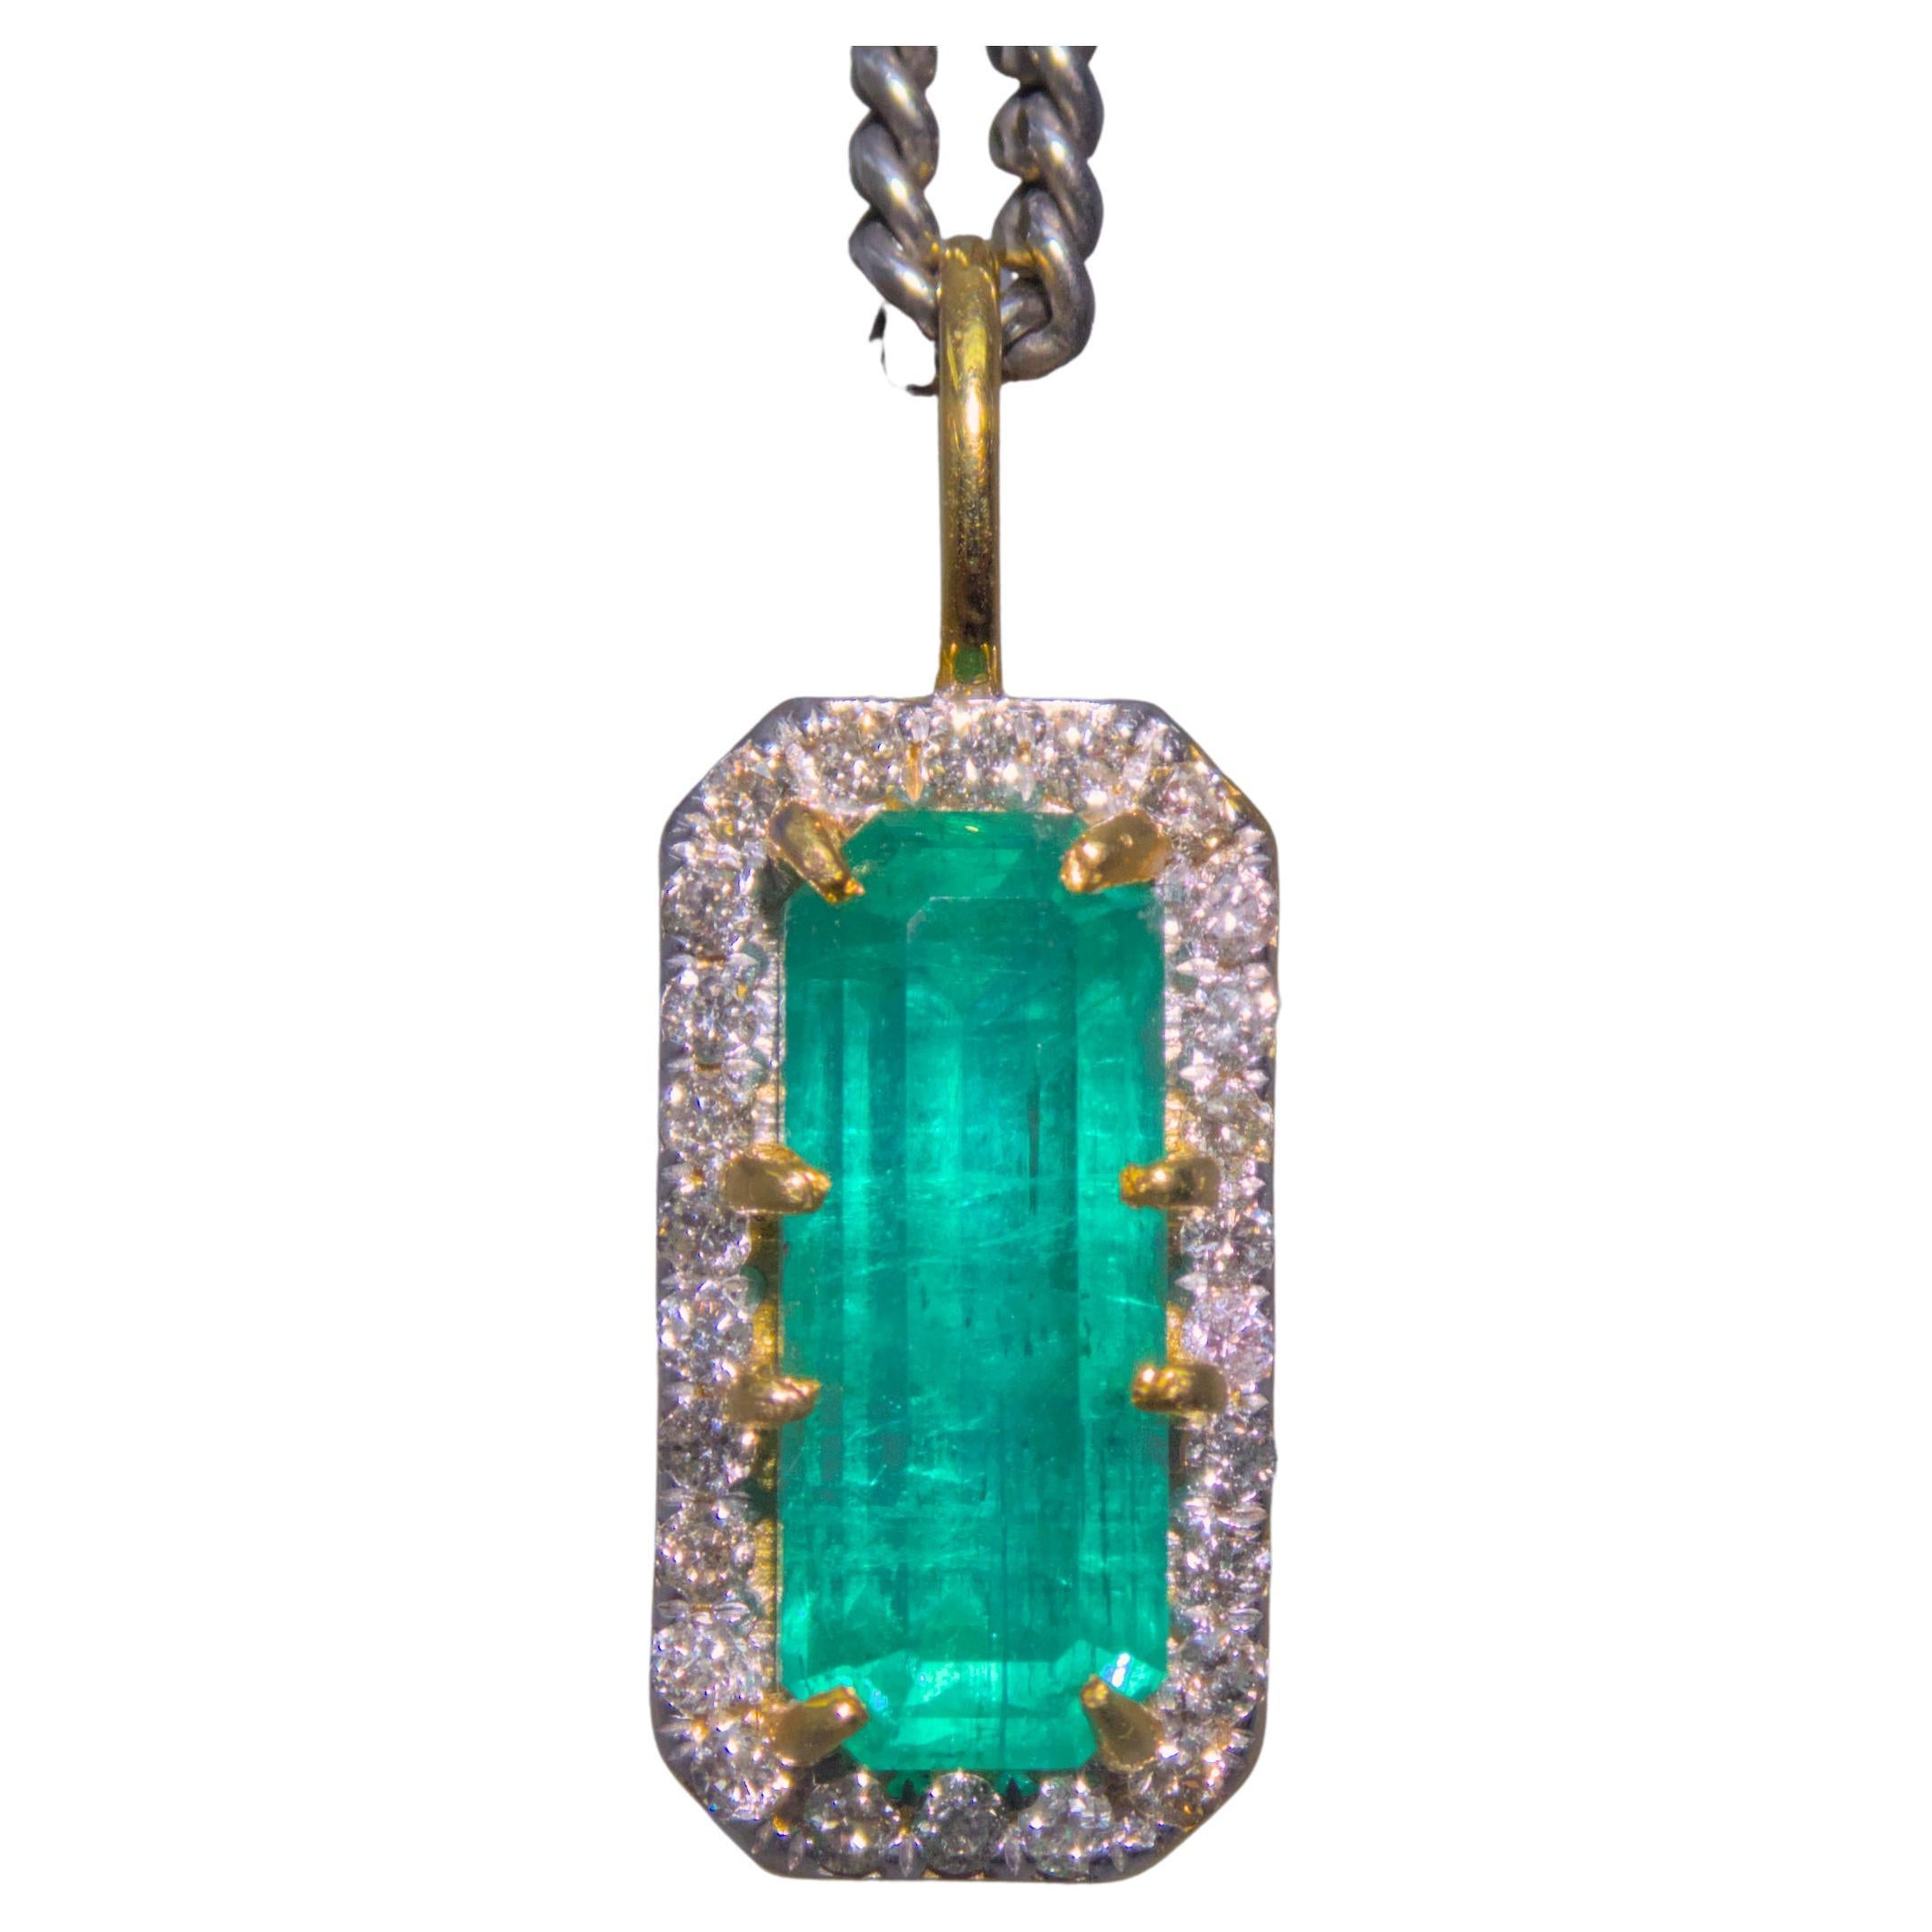 Stunning 4.72 Afghan Emerald Pendant with Diamond Halo